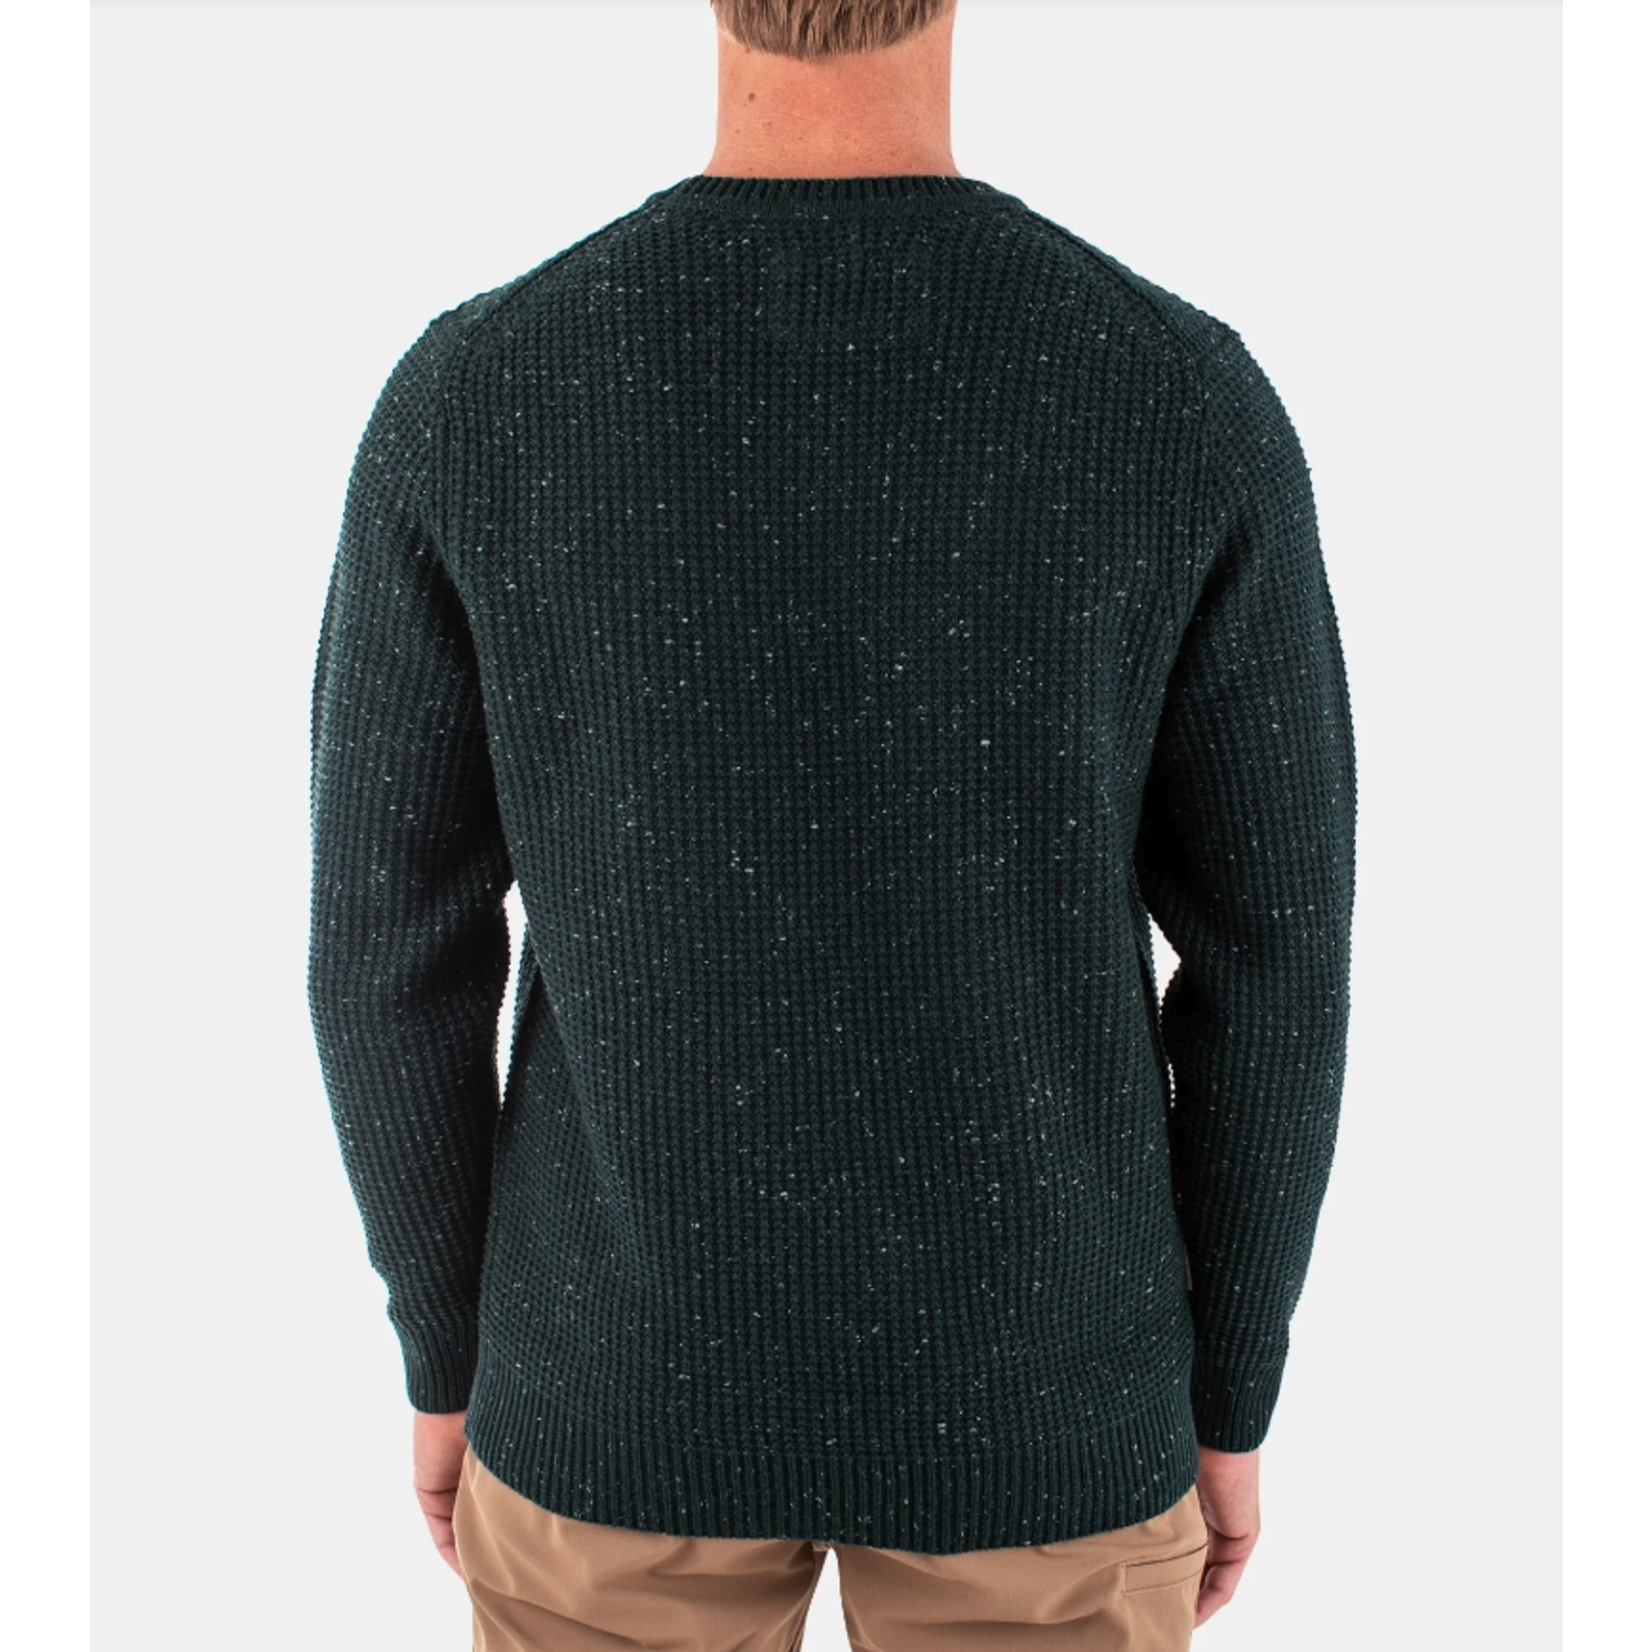 Jetty Paragon Oystex Sweater